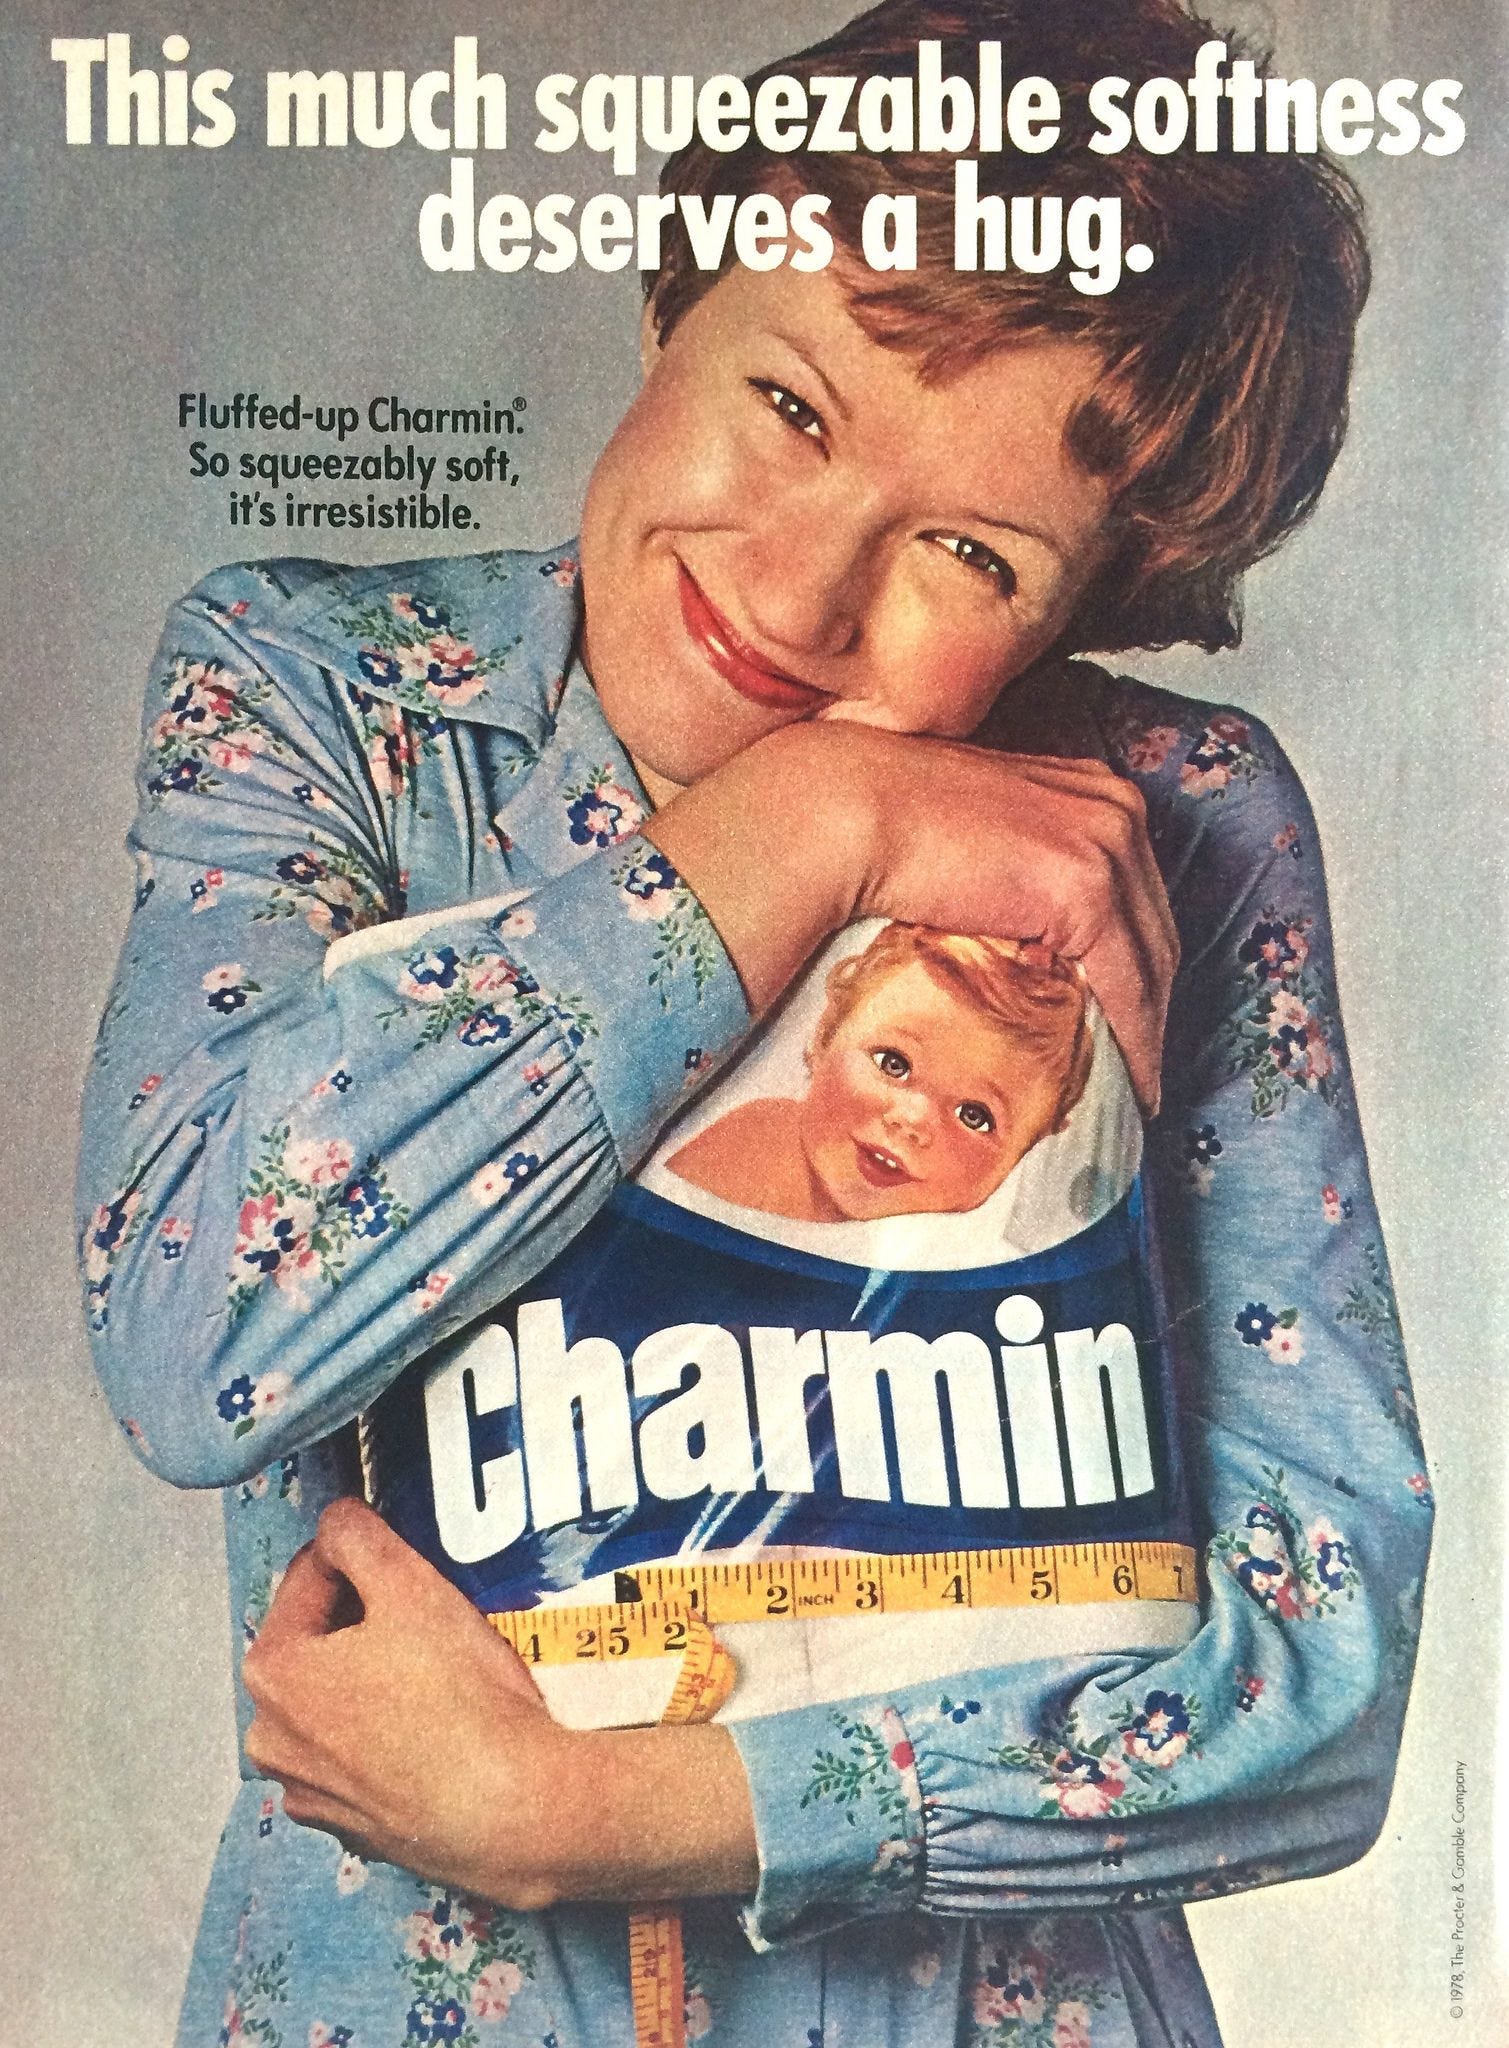 1970s: Charmin | Commercial advertisement, Vintage ads, Fun